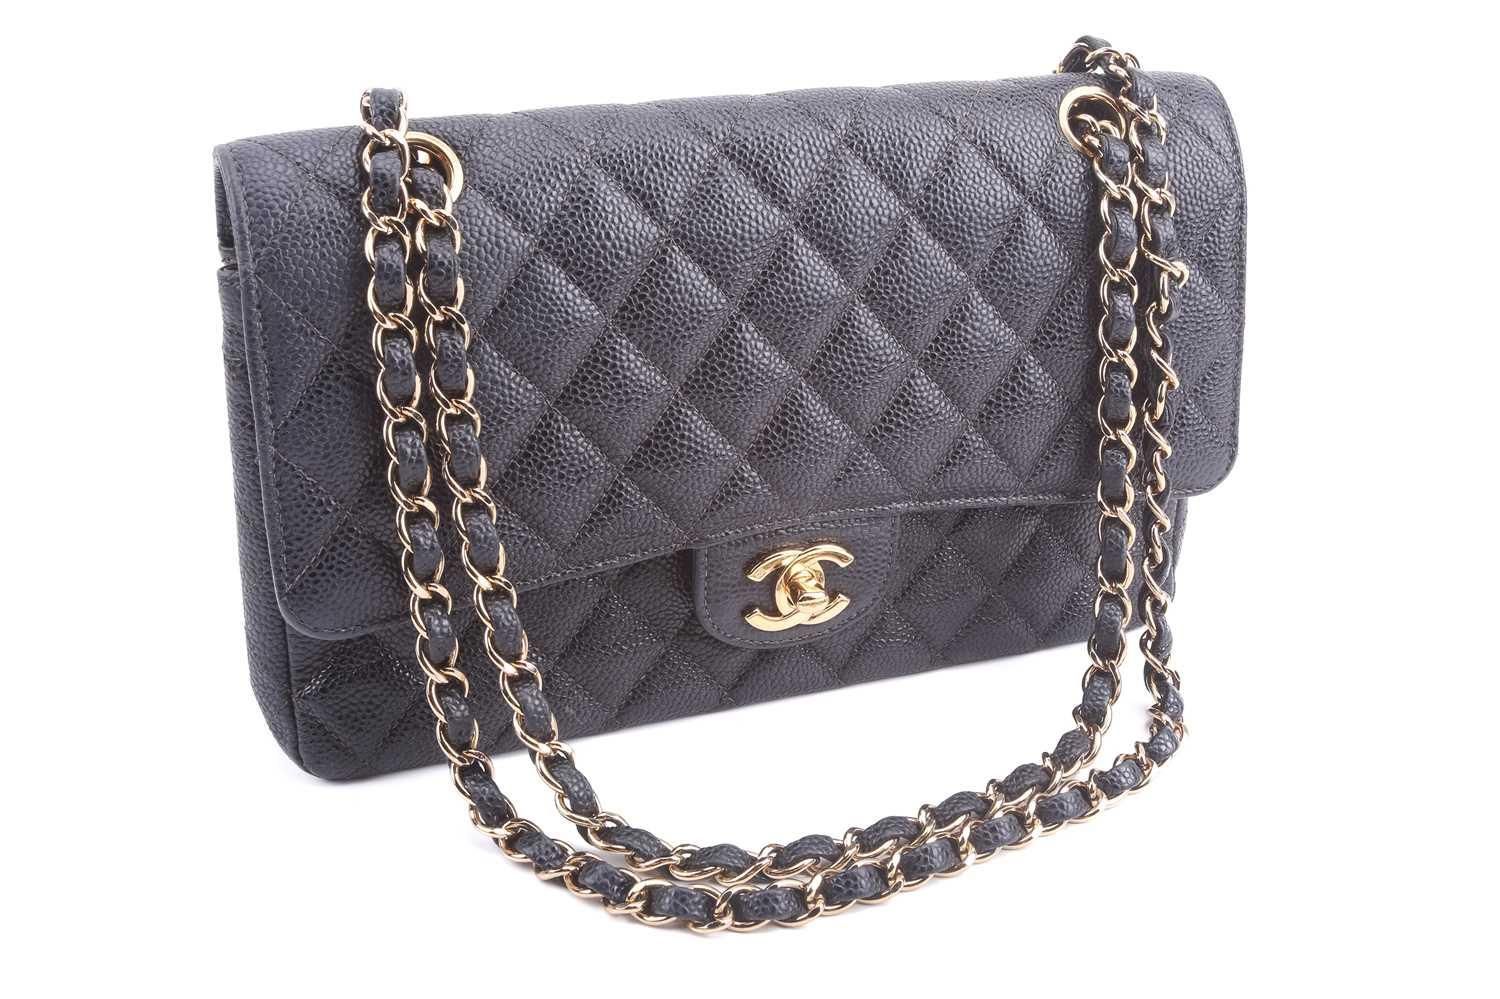 Chanel - a medium classic double flap bag in black diamo…